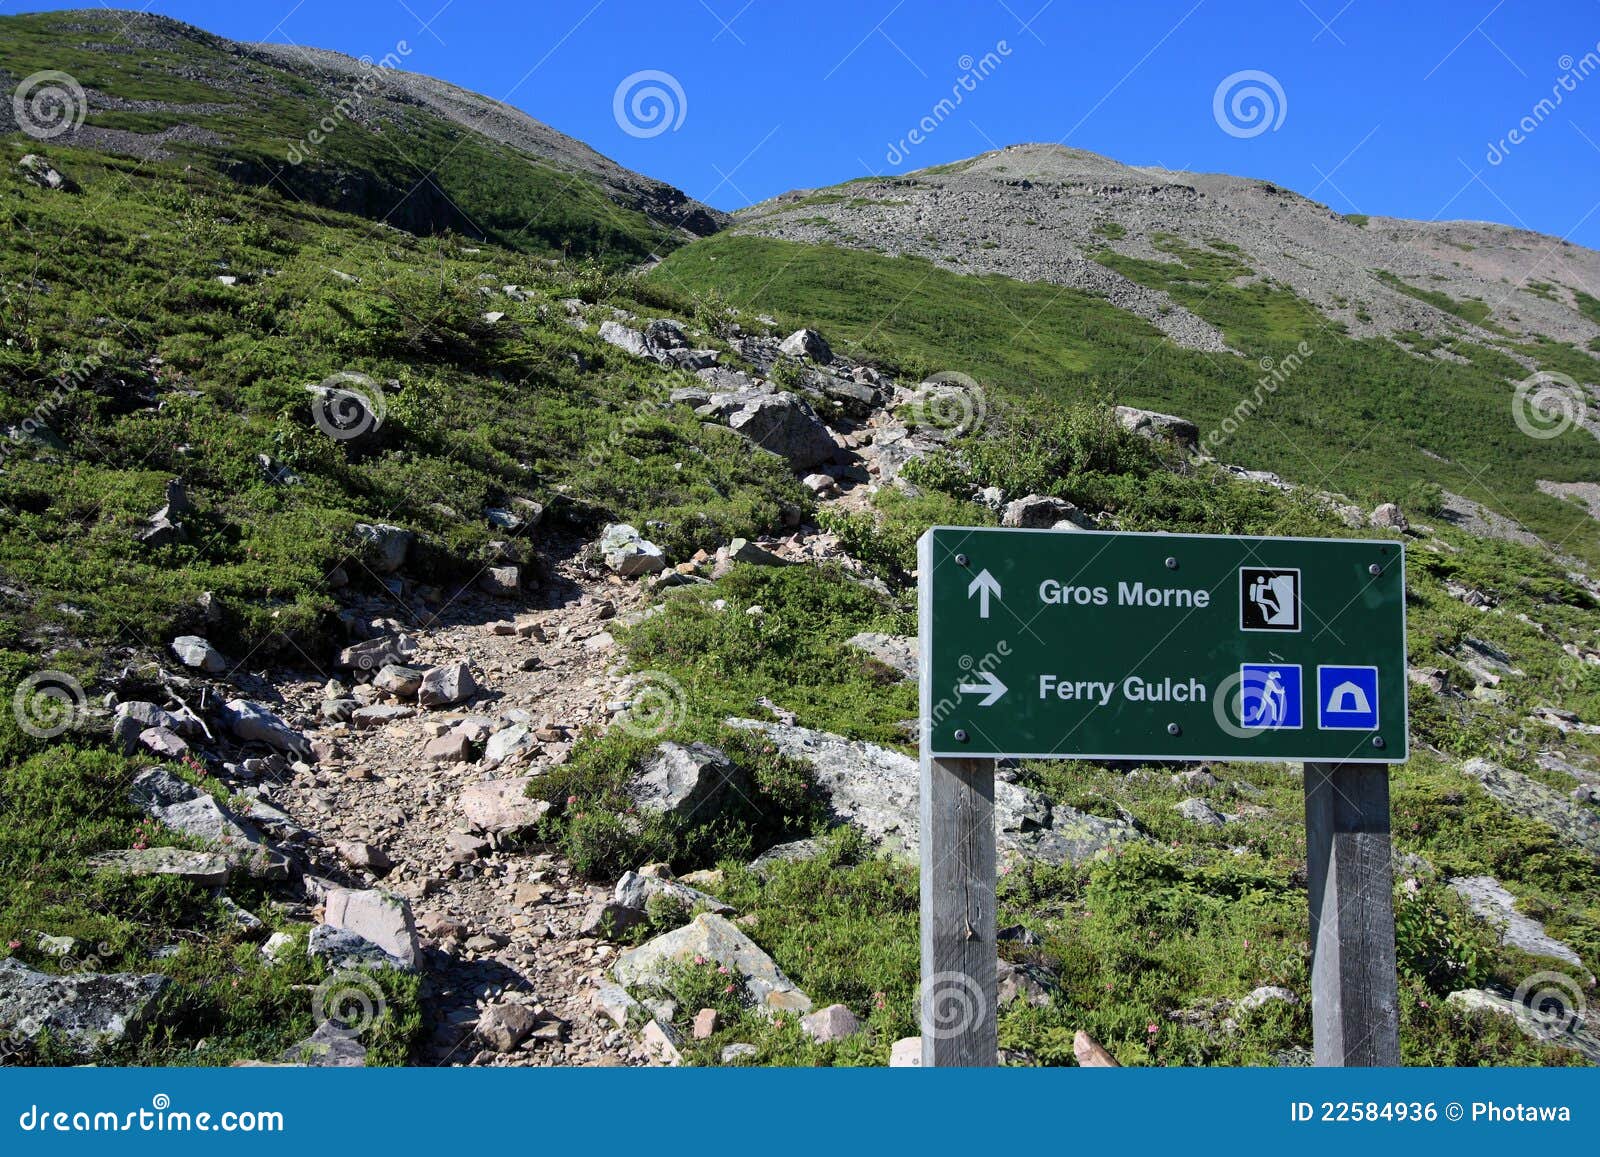 sign at gros morne mountain